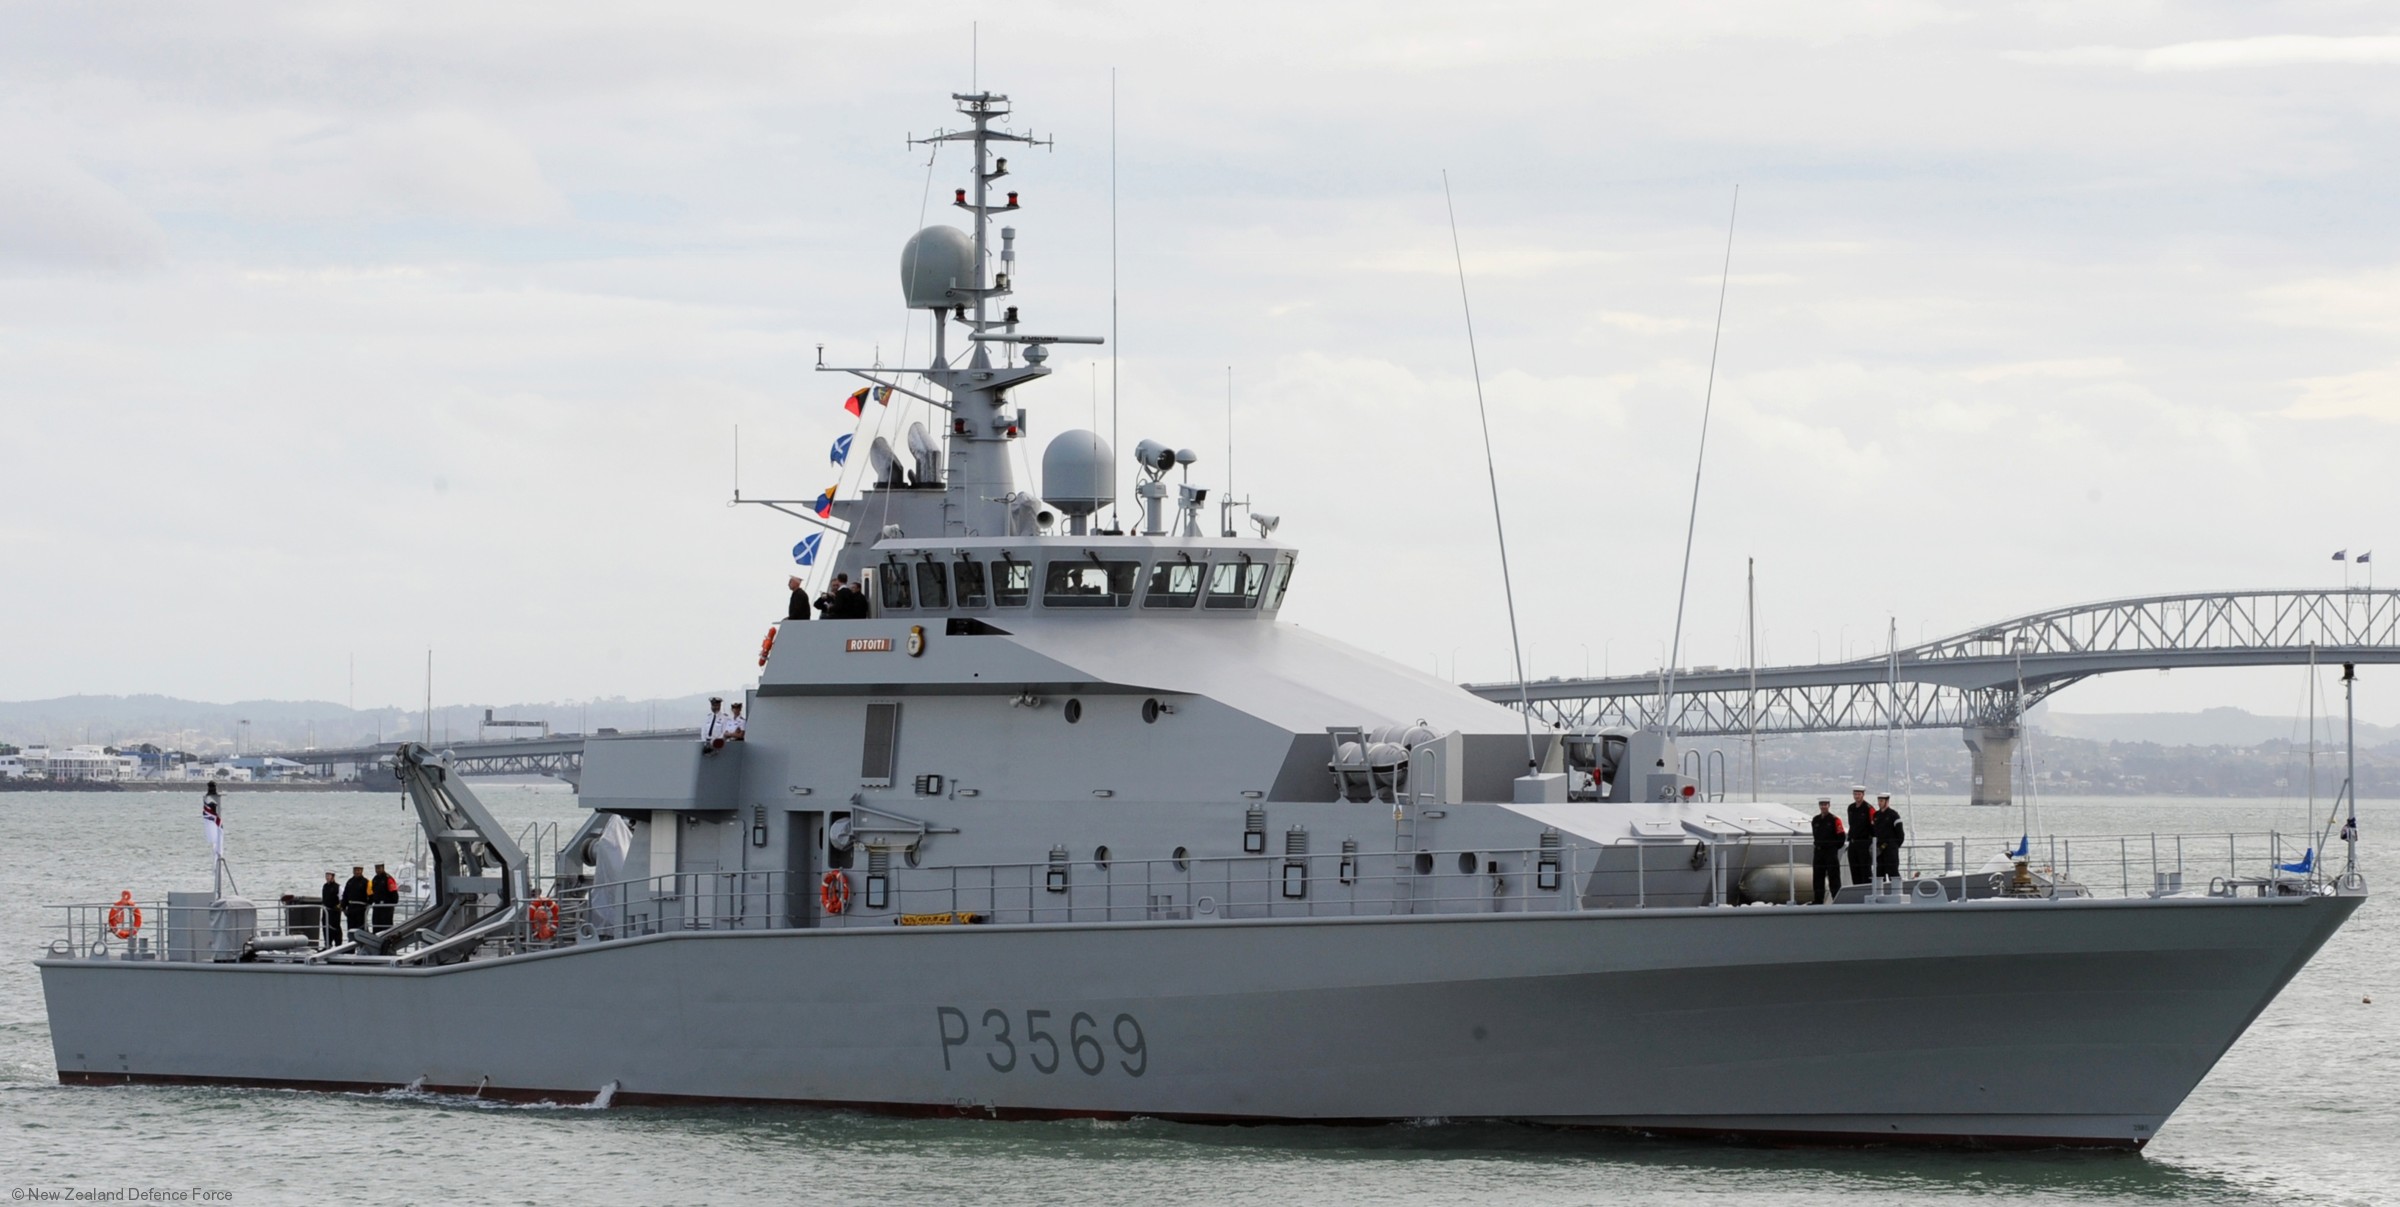 p-3569 hmnzs rotoiti protector class inshore patrol vessel royal new zealand navy 03